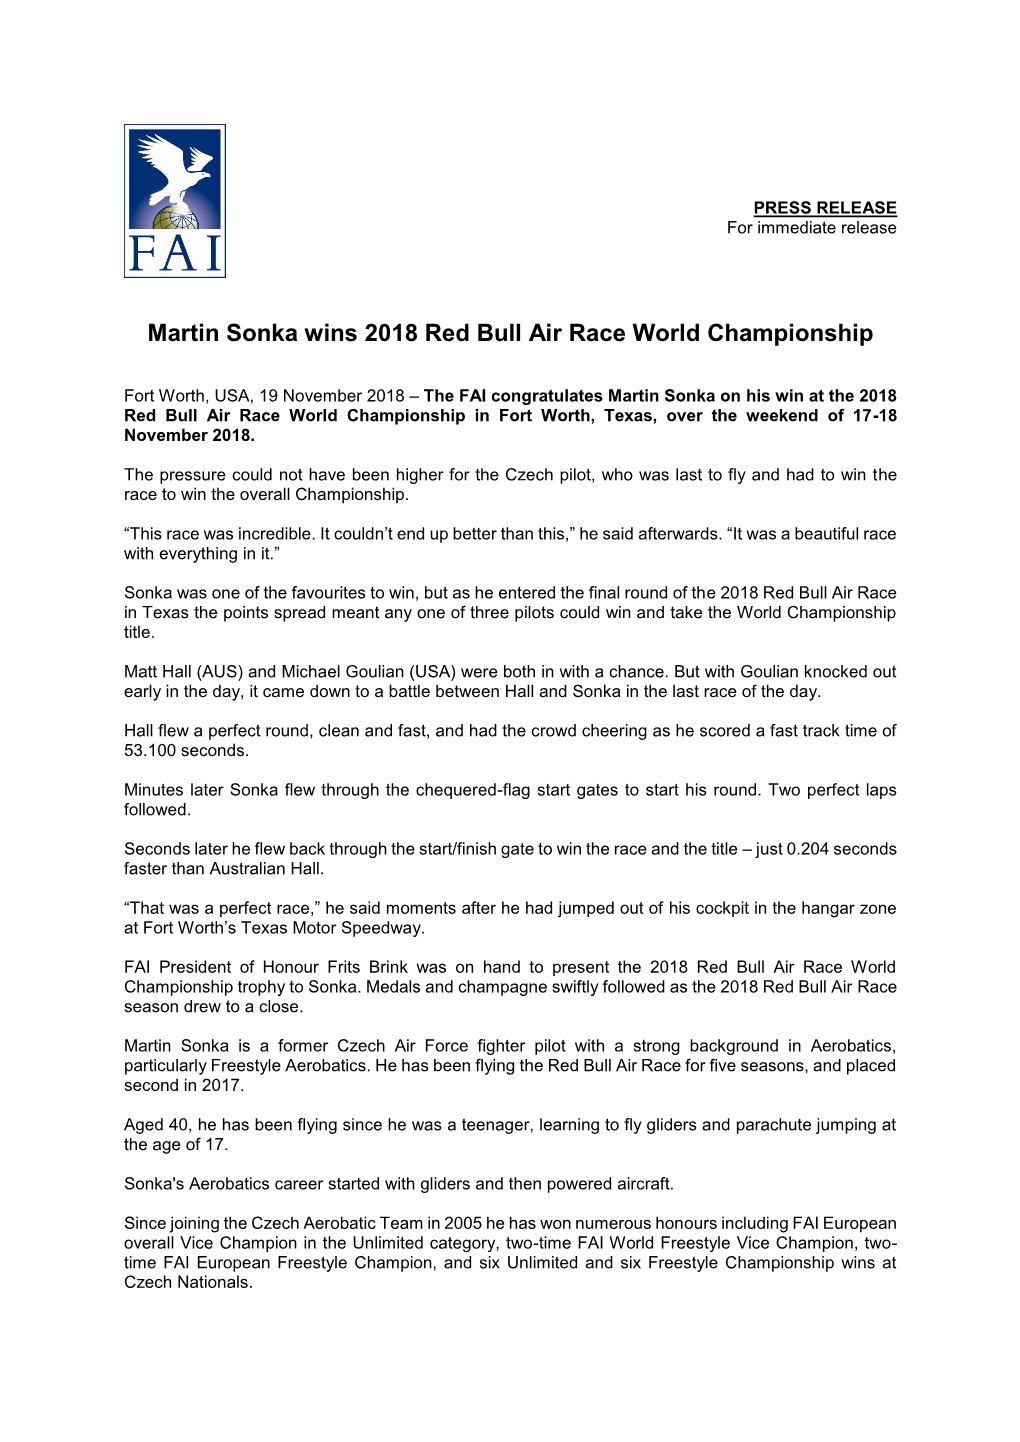 Martin Sonka Wins 2018 Red Bull Air Race World Championship